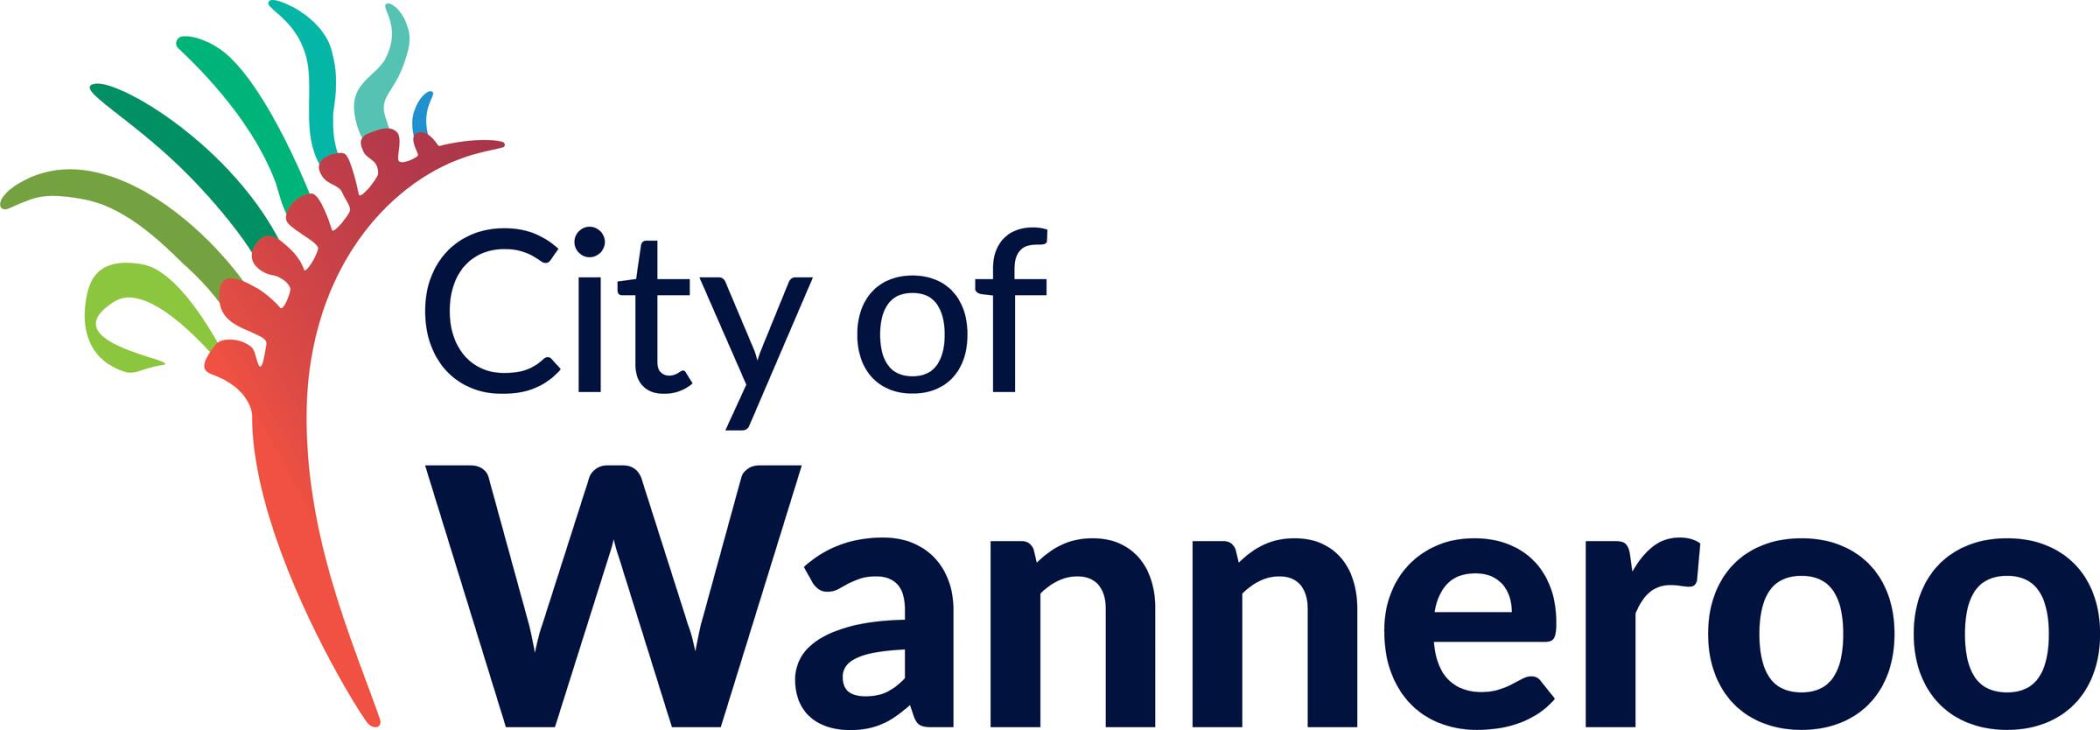 2. City of Wanneroo 2022